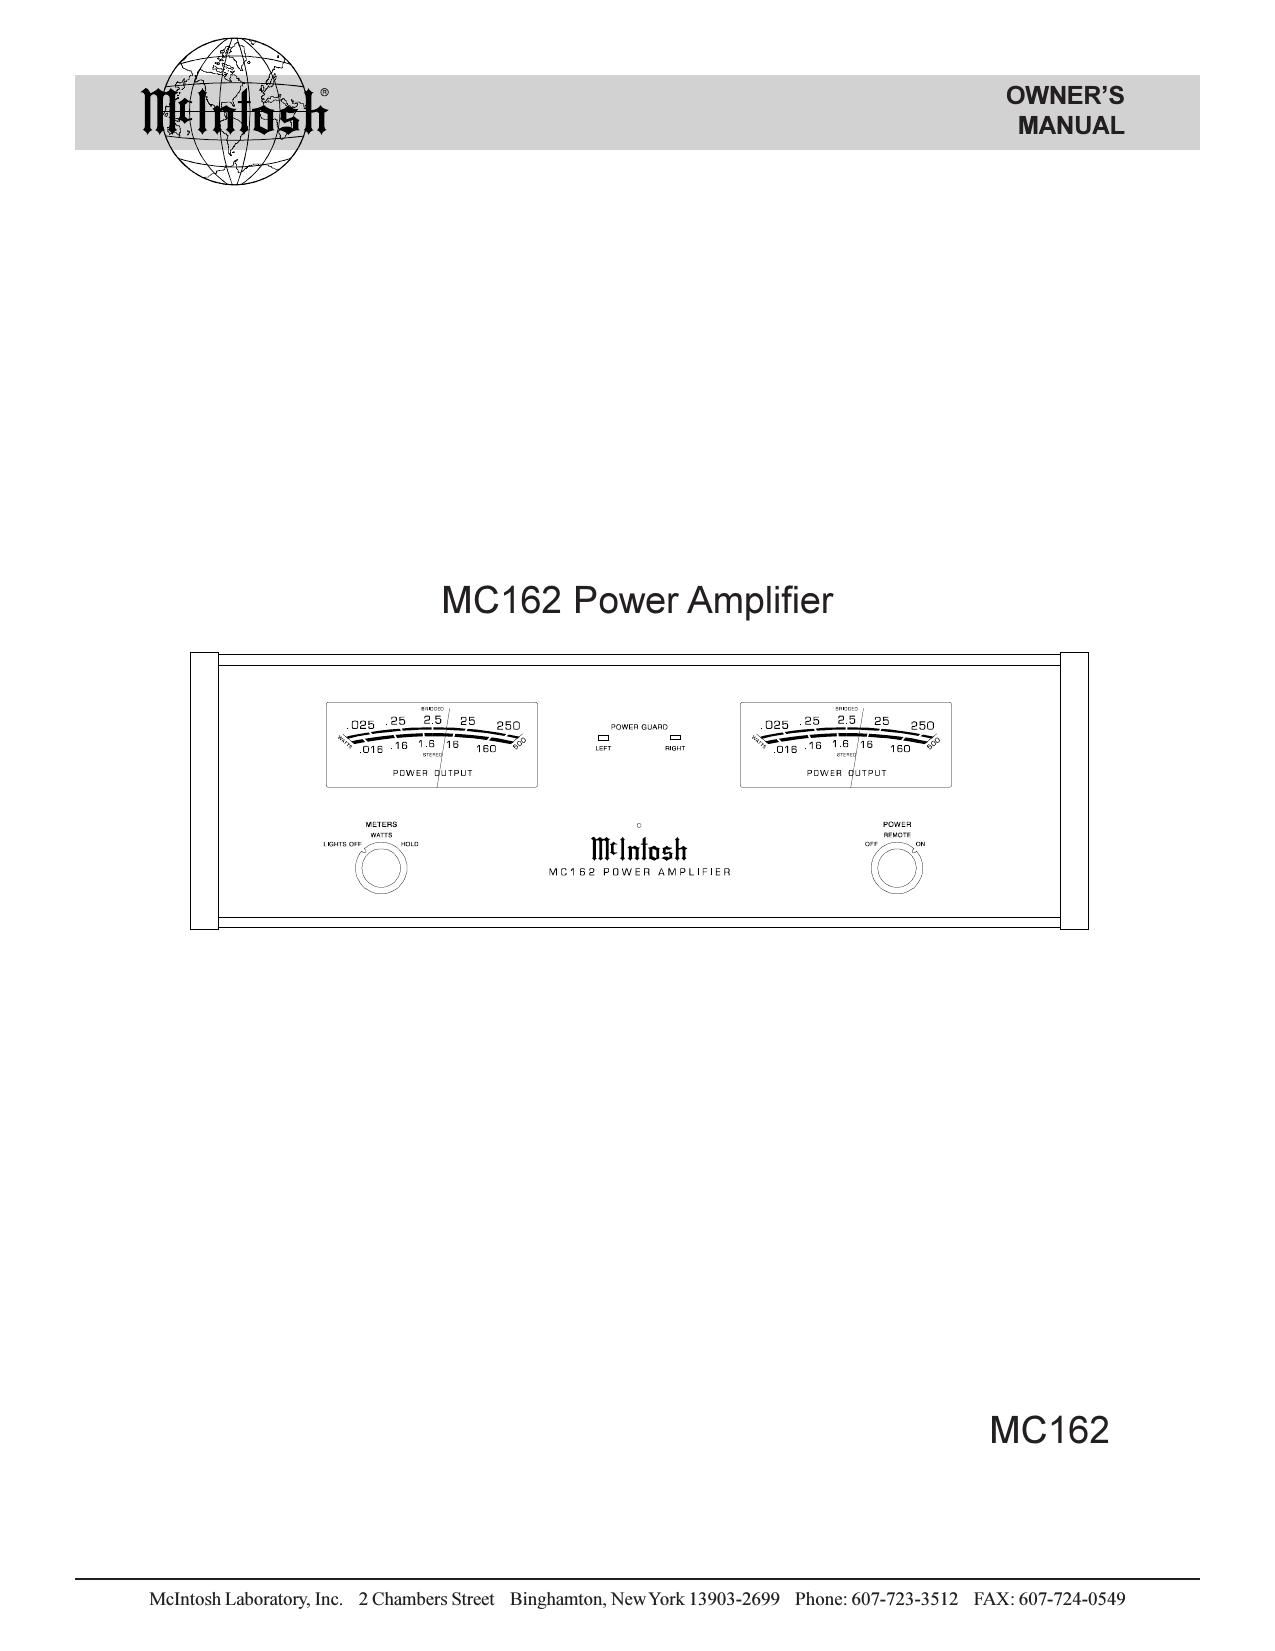 McIntosh MC 162 Owners Manual